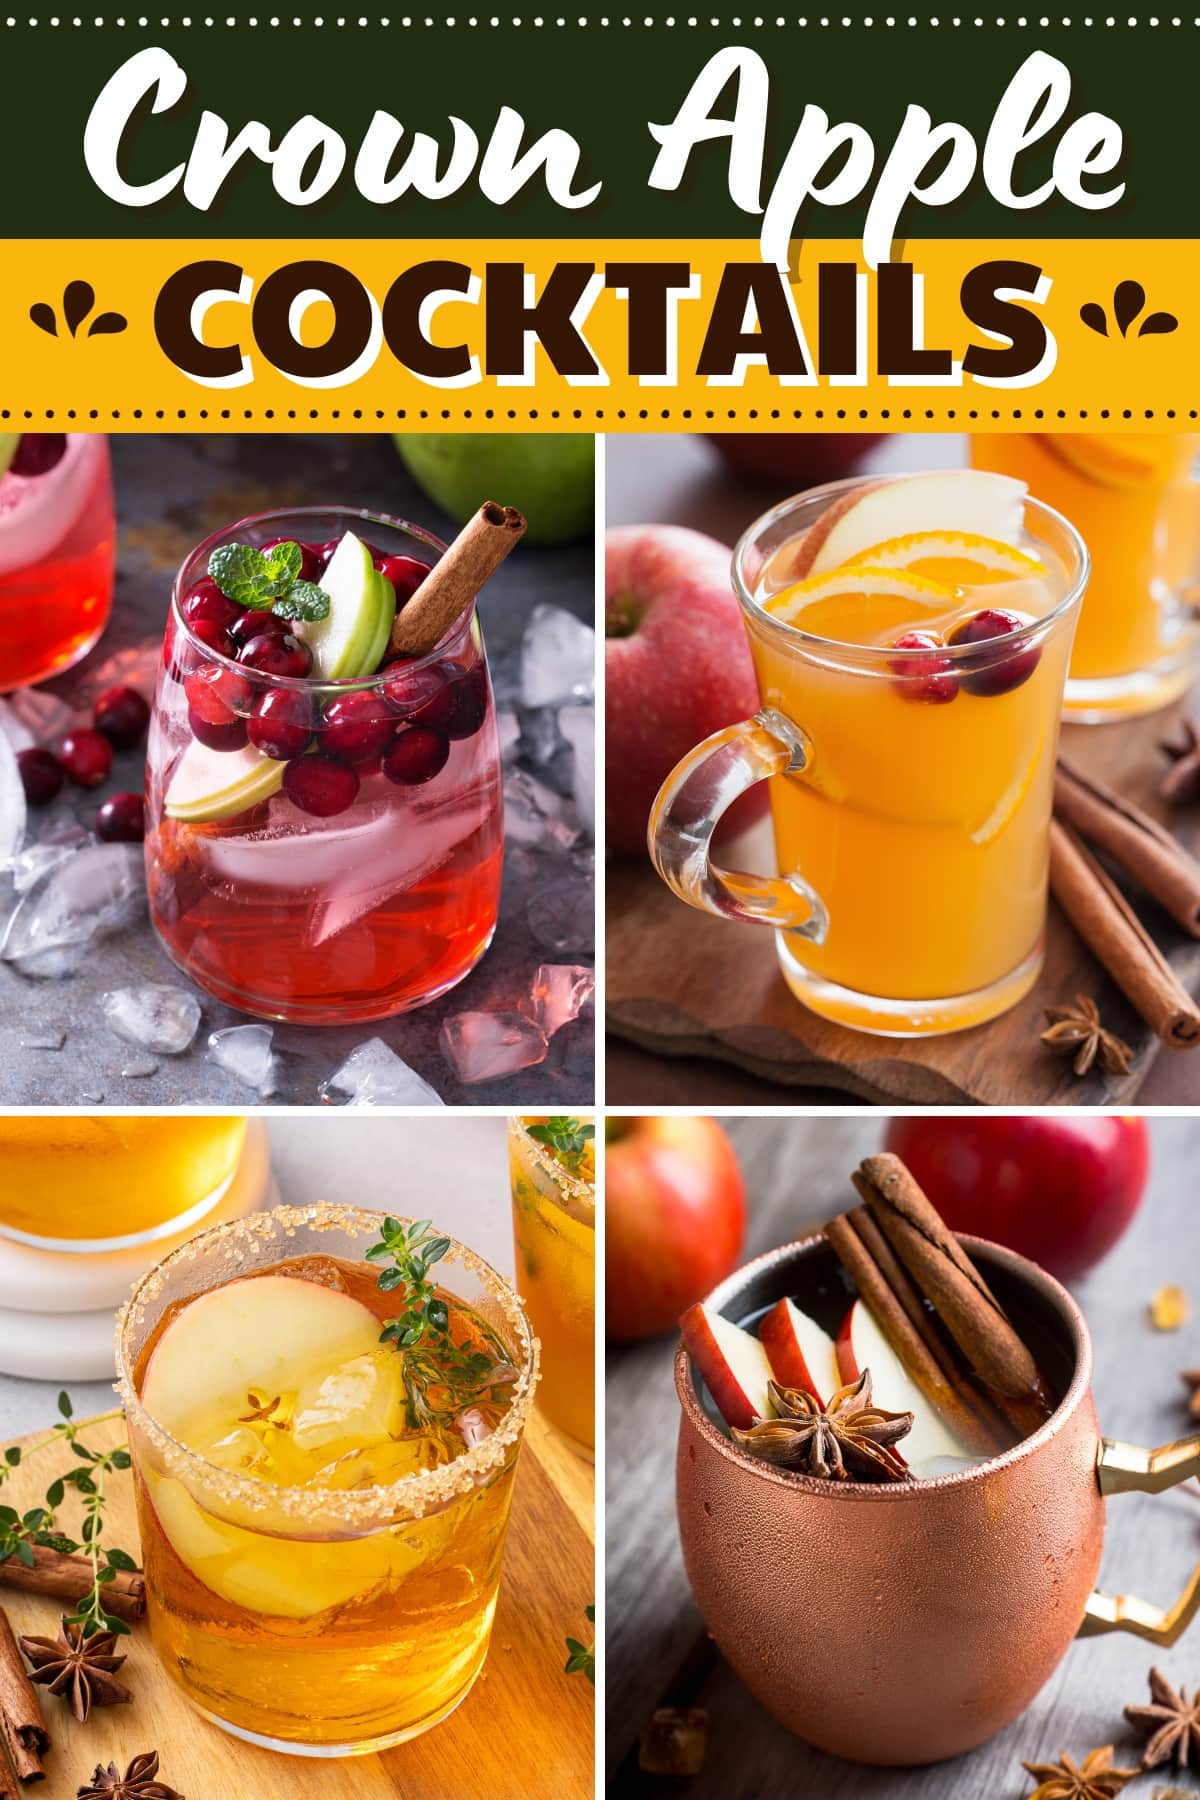 Crown Apple Cocktails